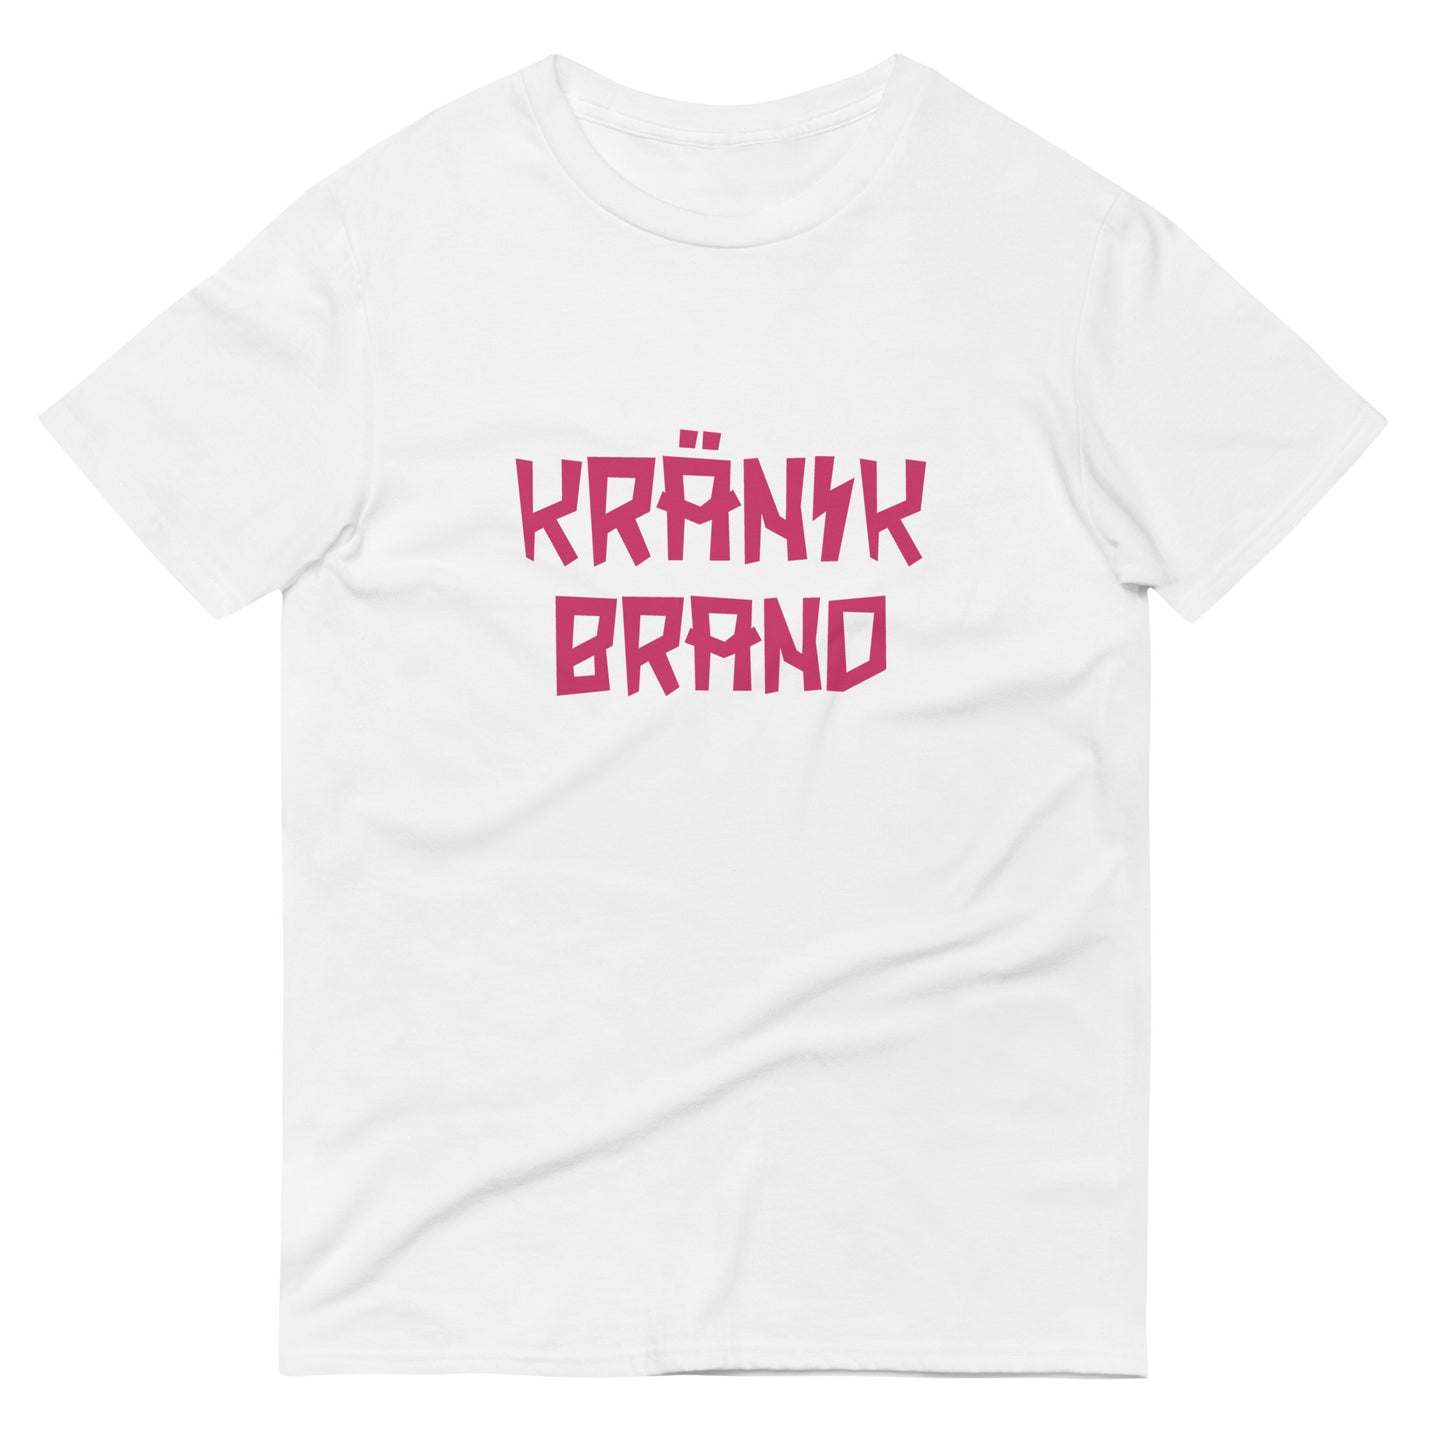 (3) Kranik Shirt -Summer Collection - Short-Sleeve Shirt - Kranik Brand